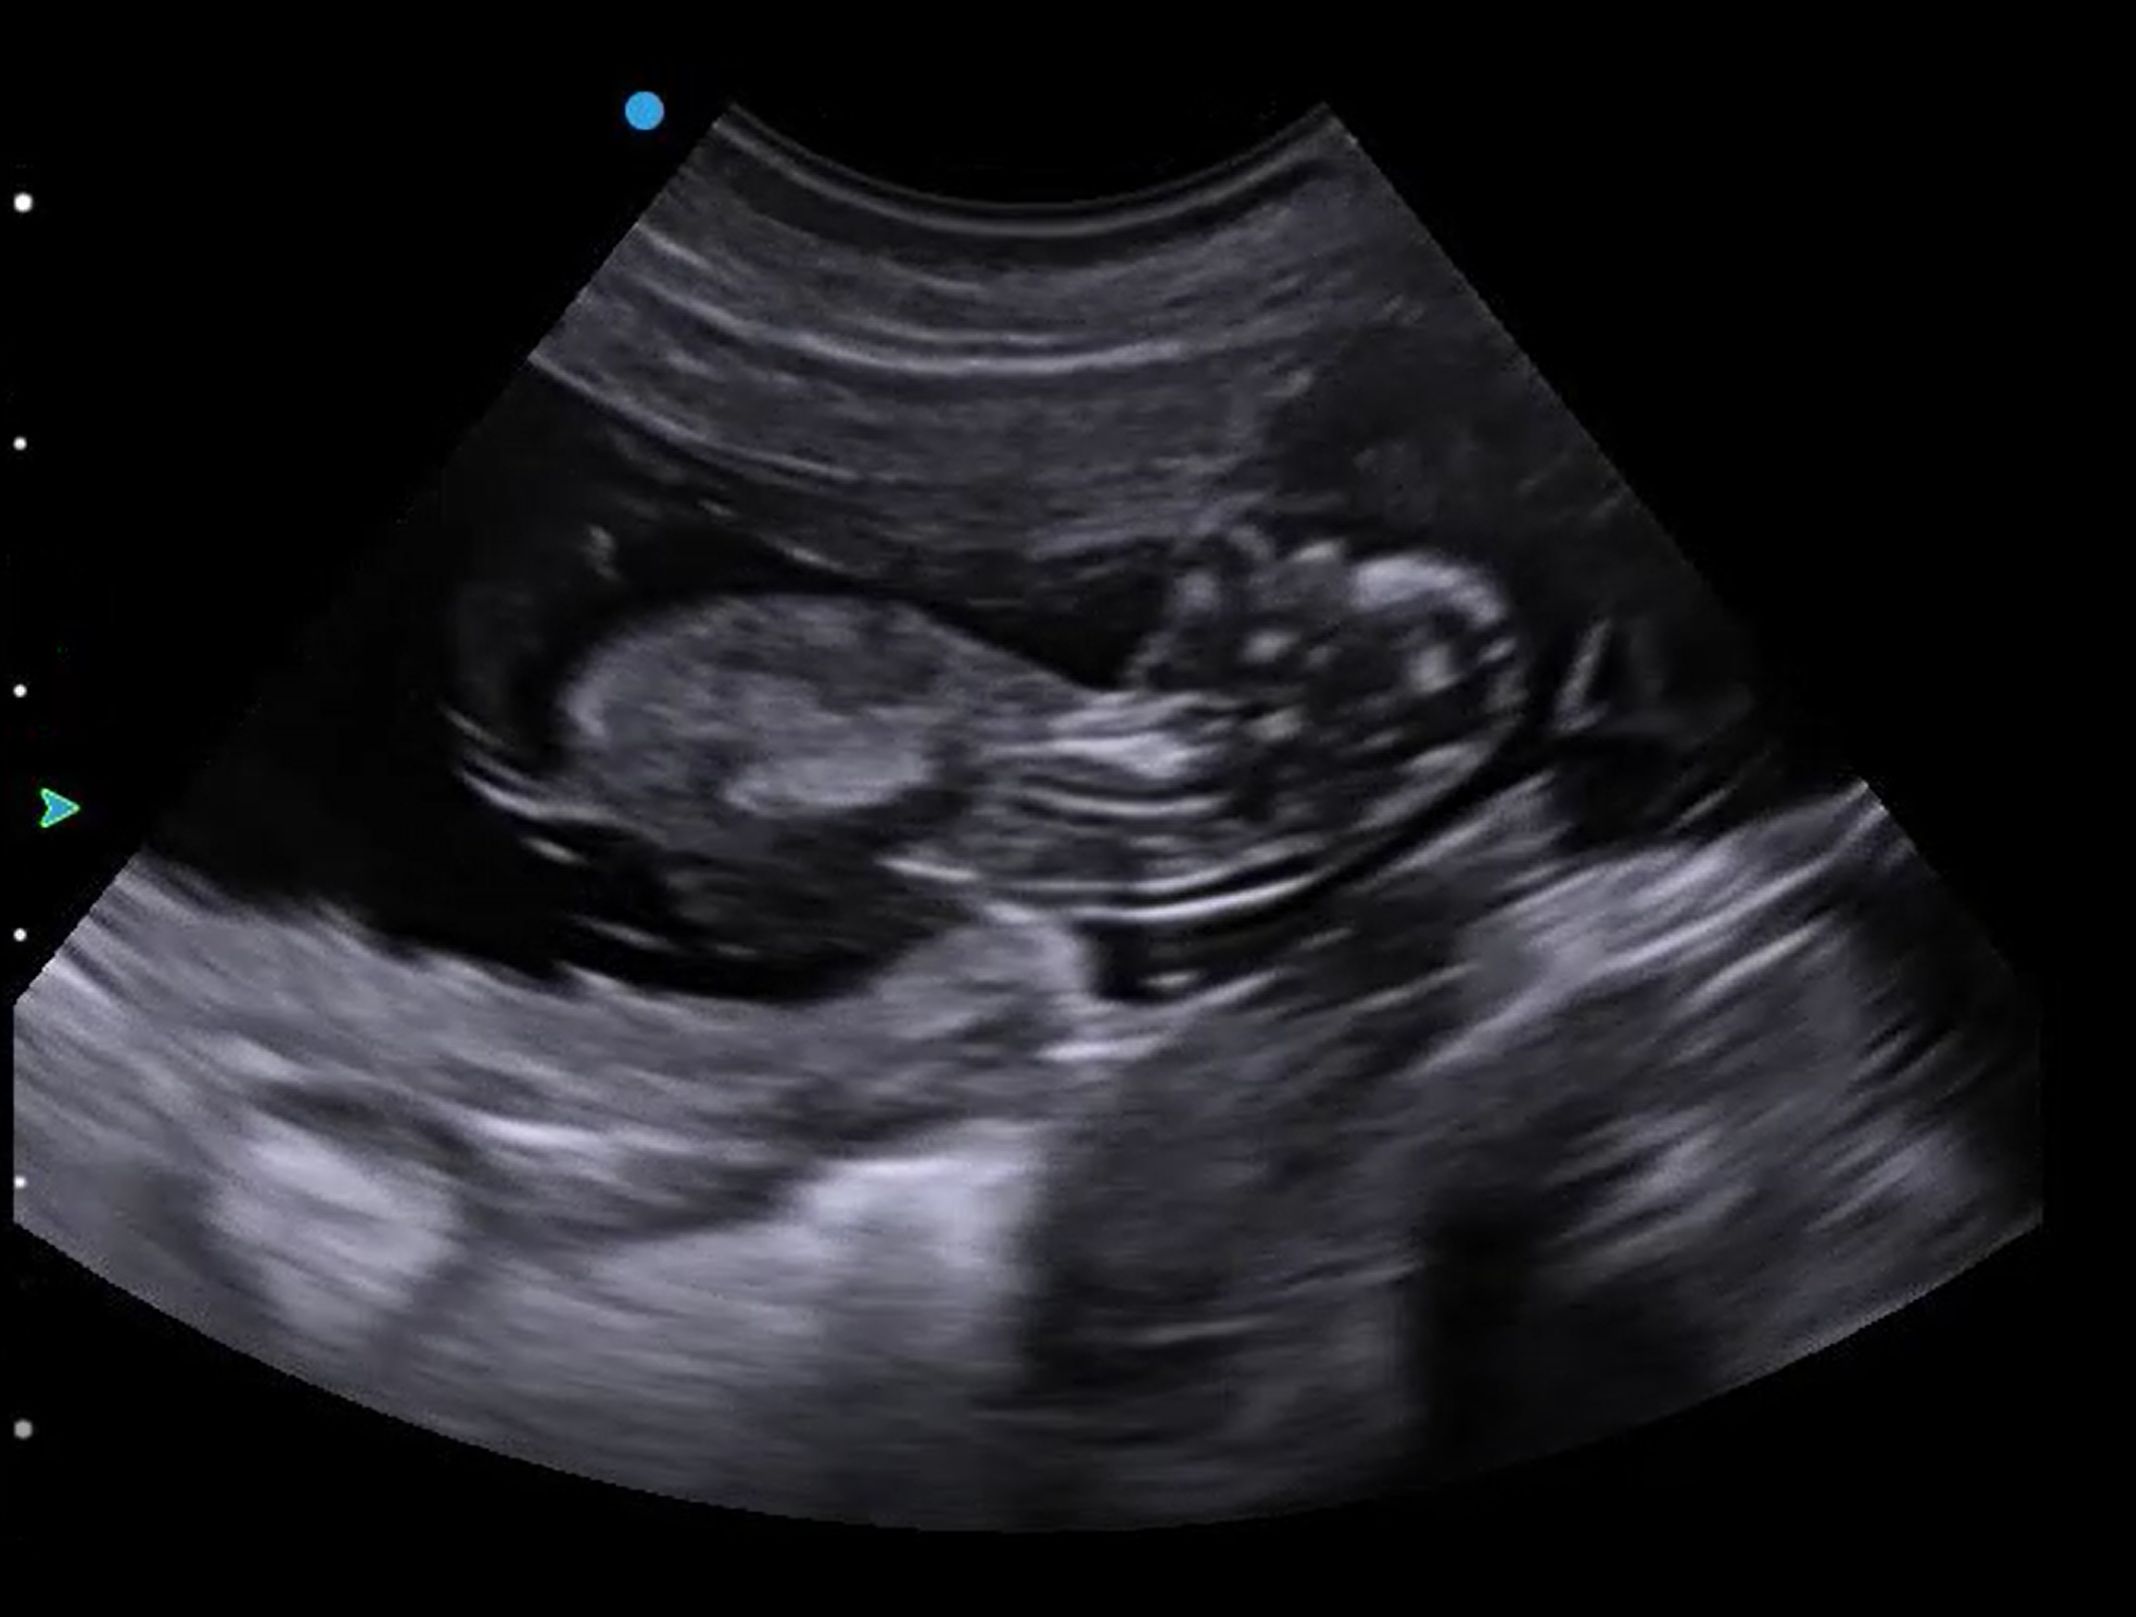 What type of ultrasound training should I undertake?